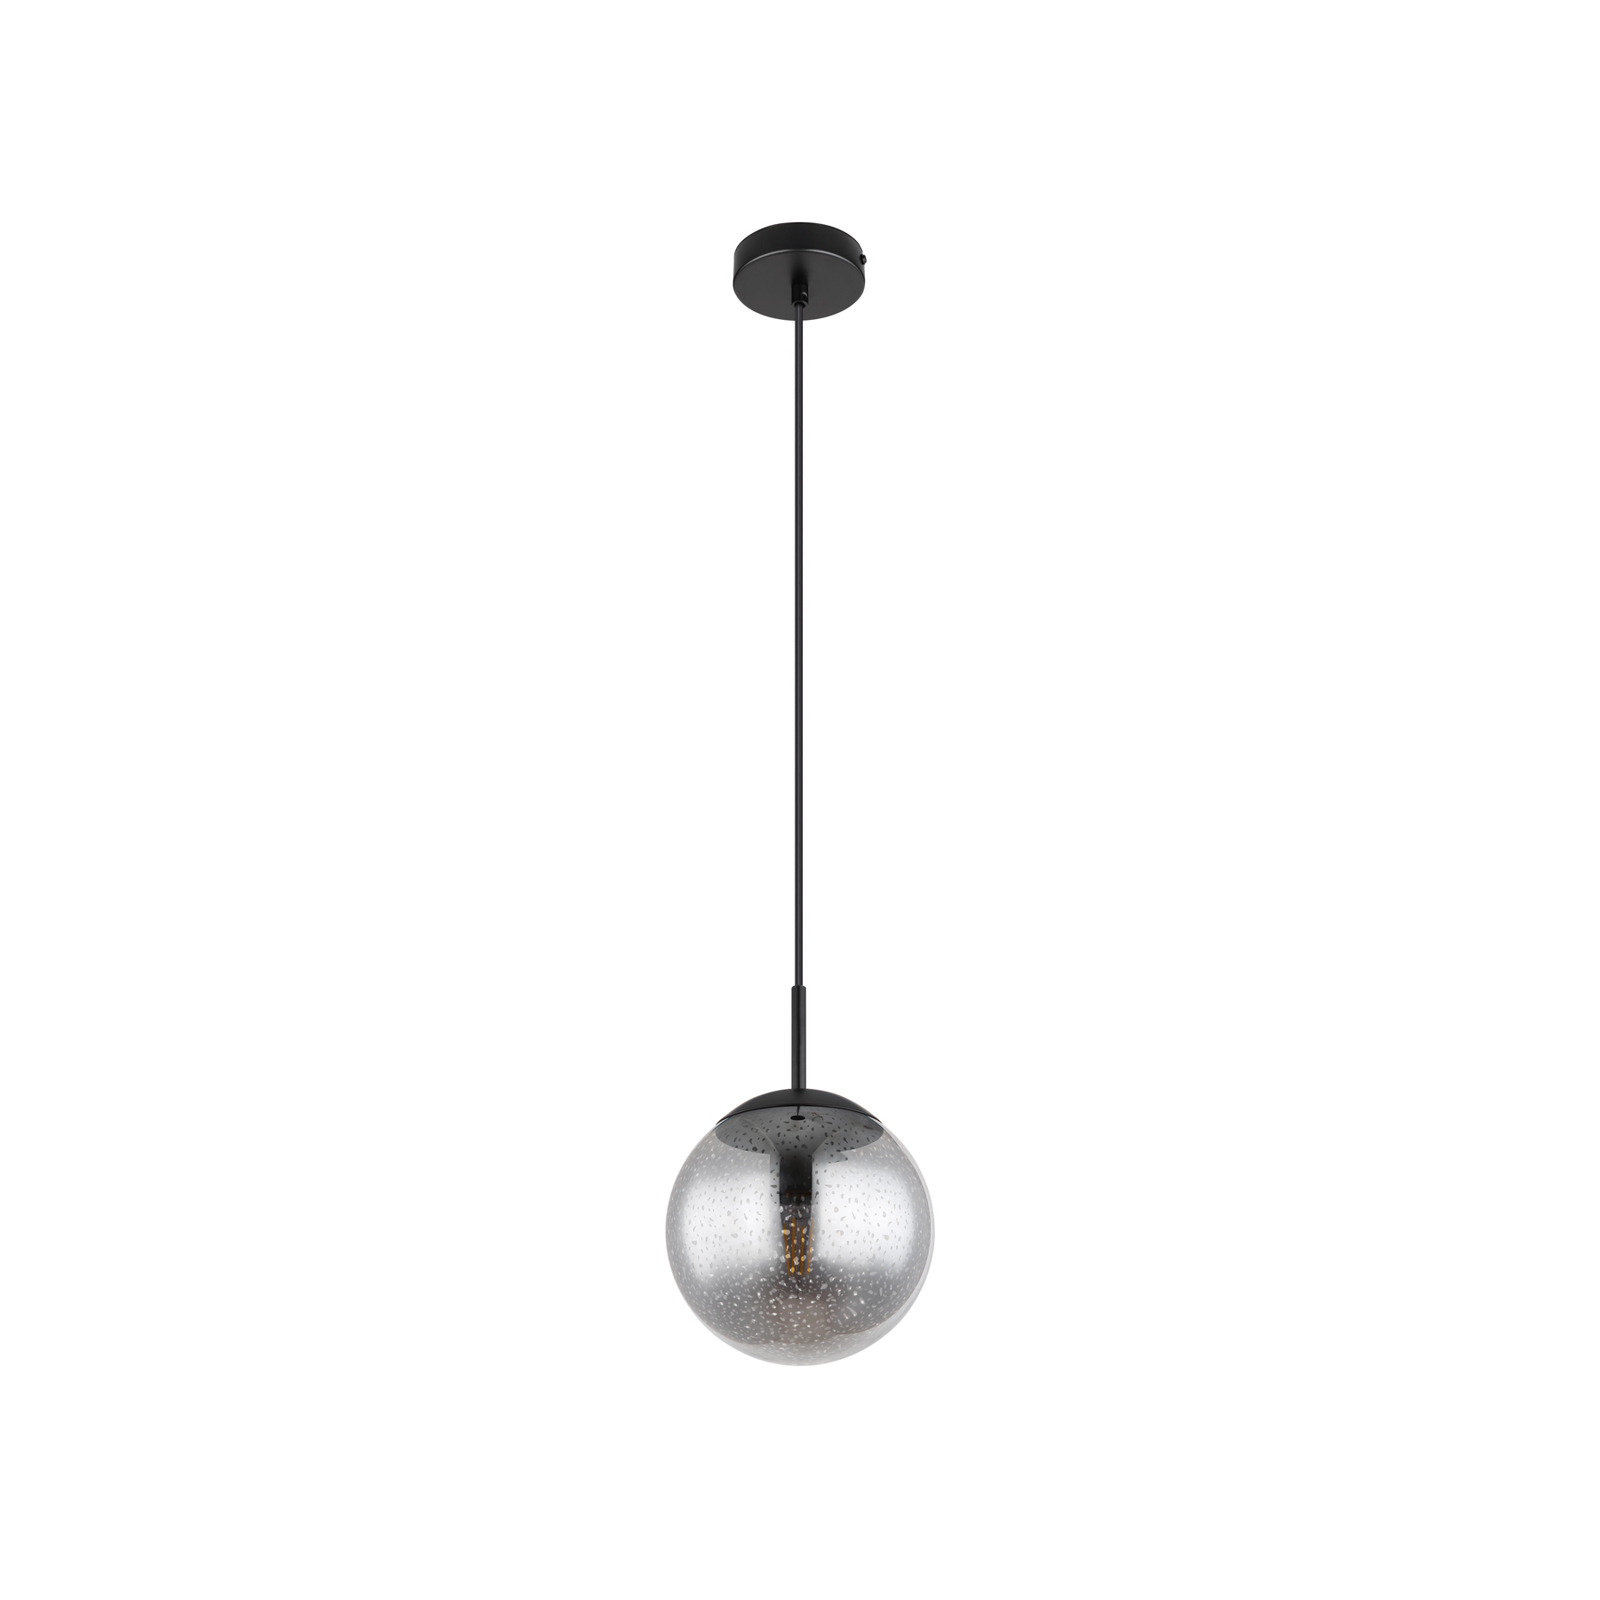 Viseća lampa Samos, Ø 20 cm, dim siva/crna, staklo